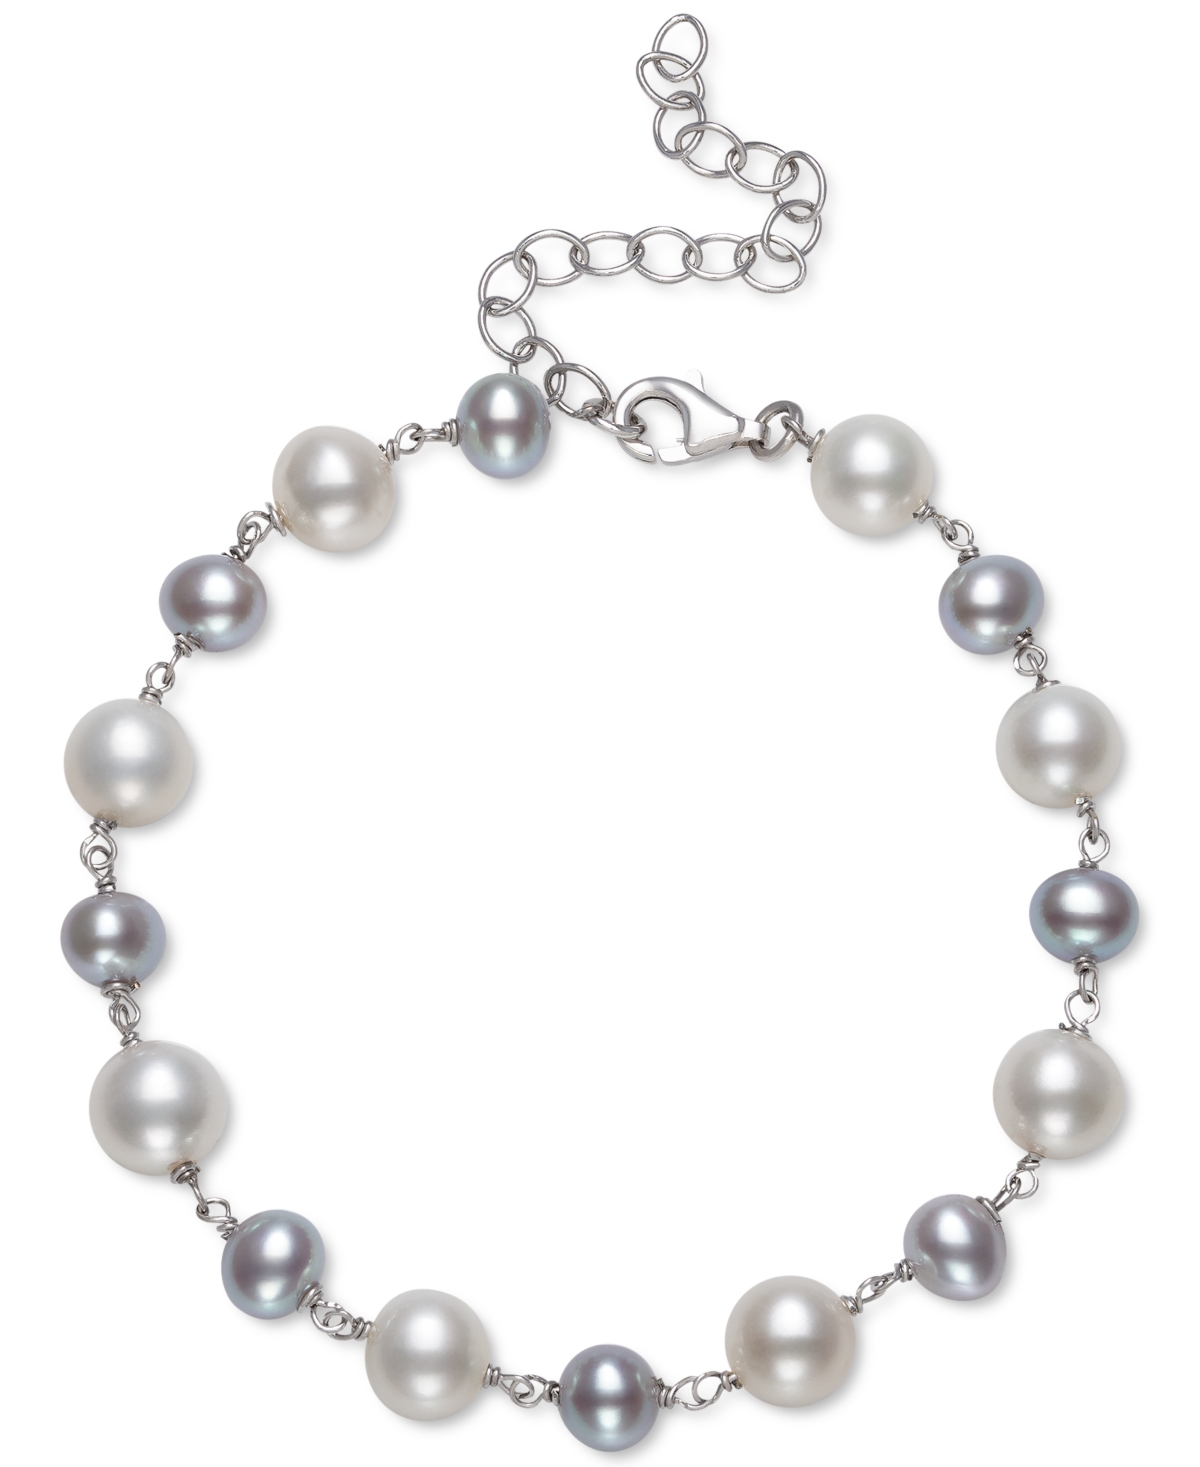 Belle de Mer Gray & White Cultured Freshwater Pearl (5-6mm & 7-8mm) Bracelet in Sterling Silver (Also in Pink & White Cultured Freshwater Pearl), Created for Macy's